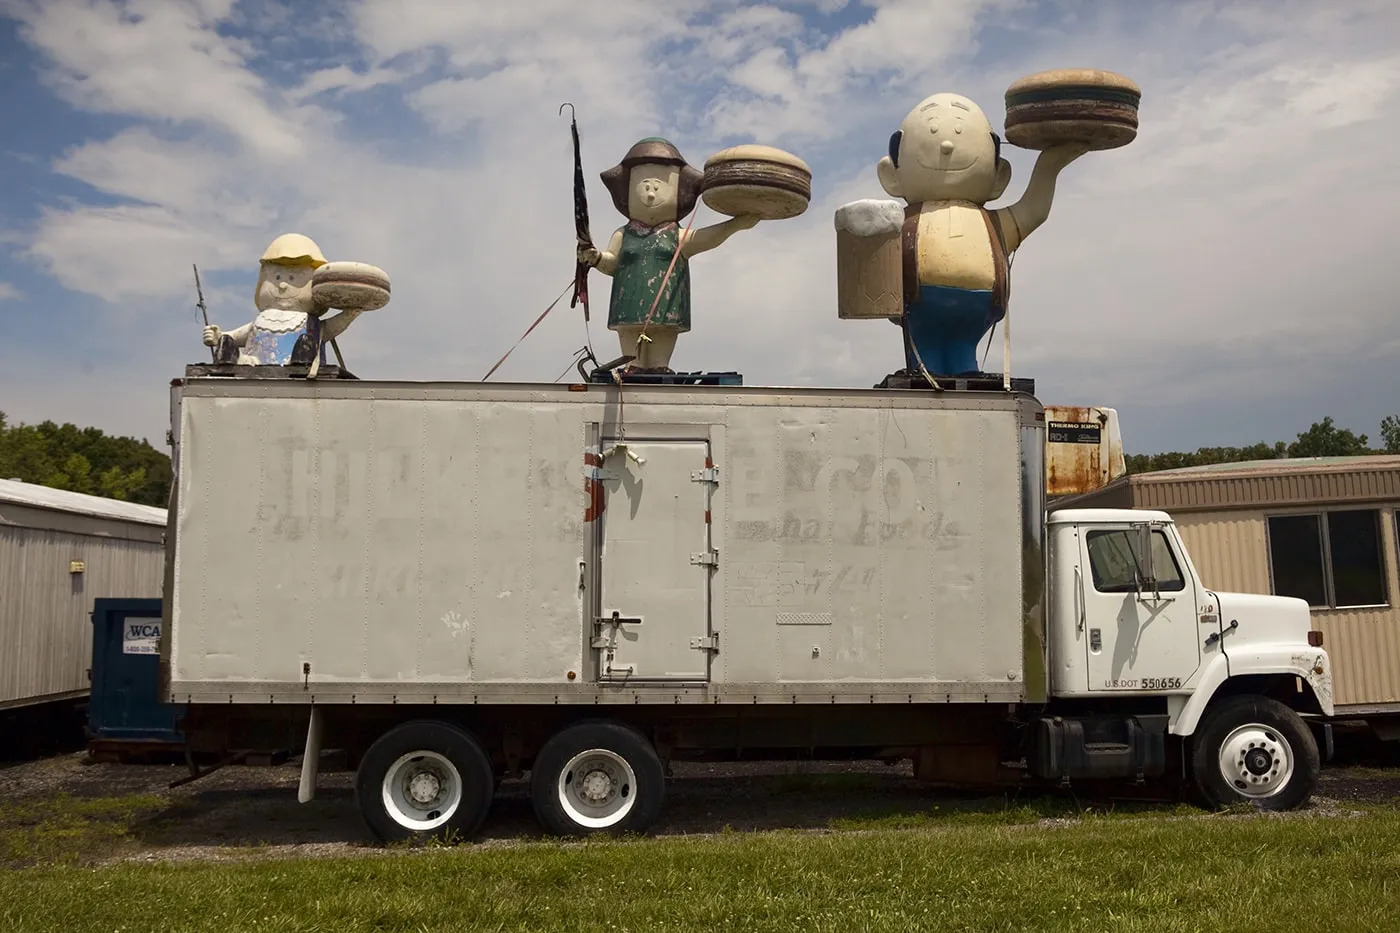 A&W Burger Family, a roadside attraction in Rolla, Missouri